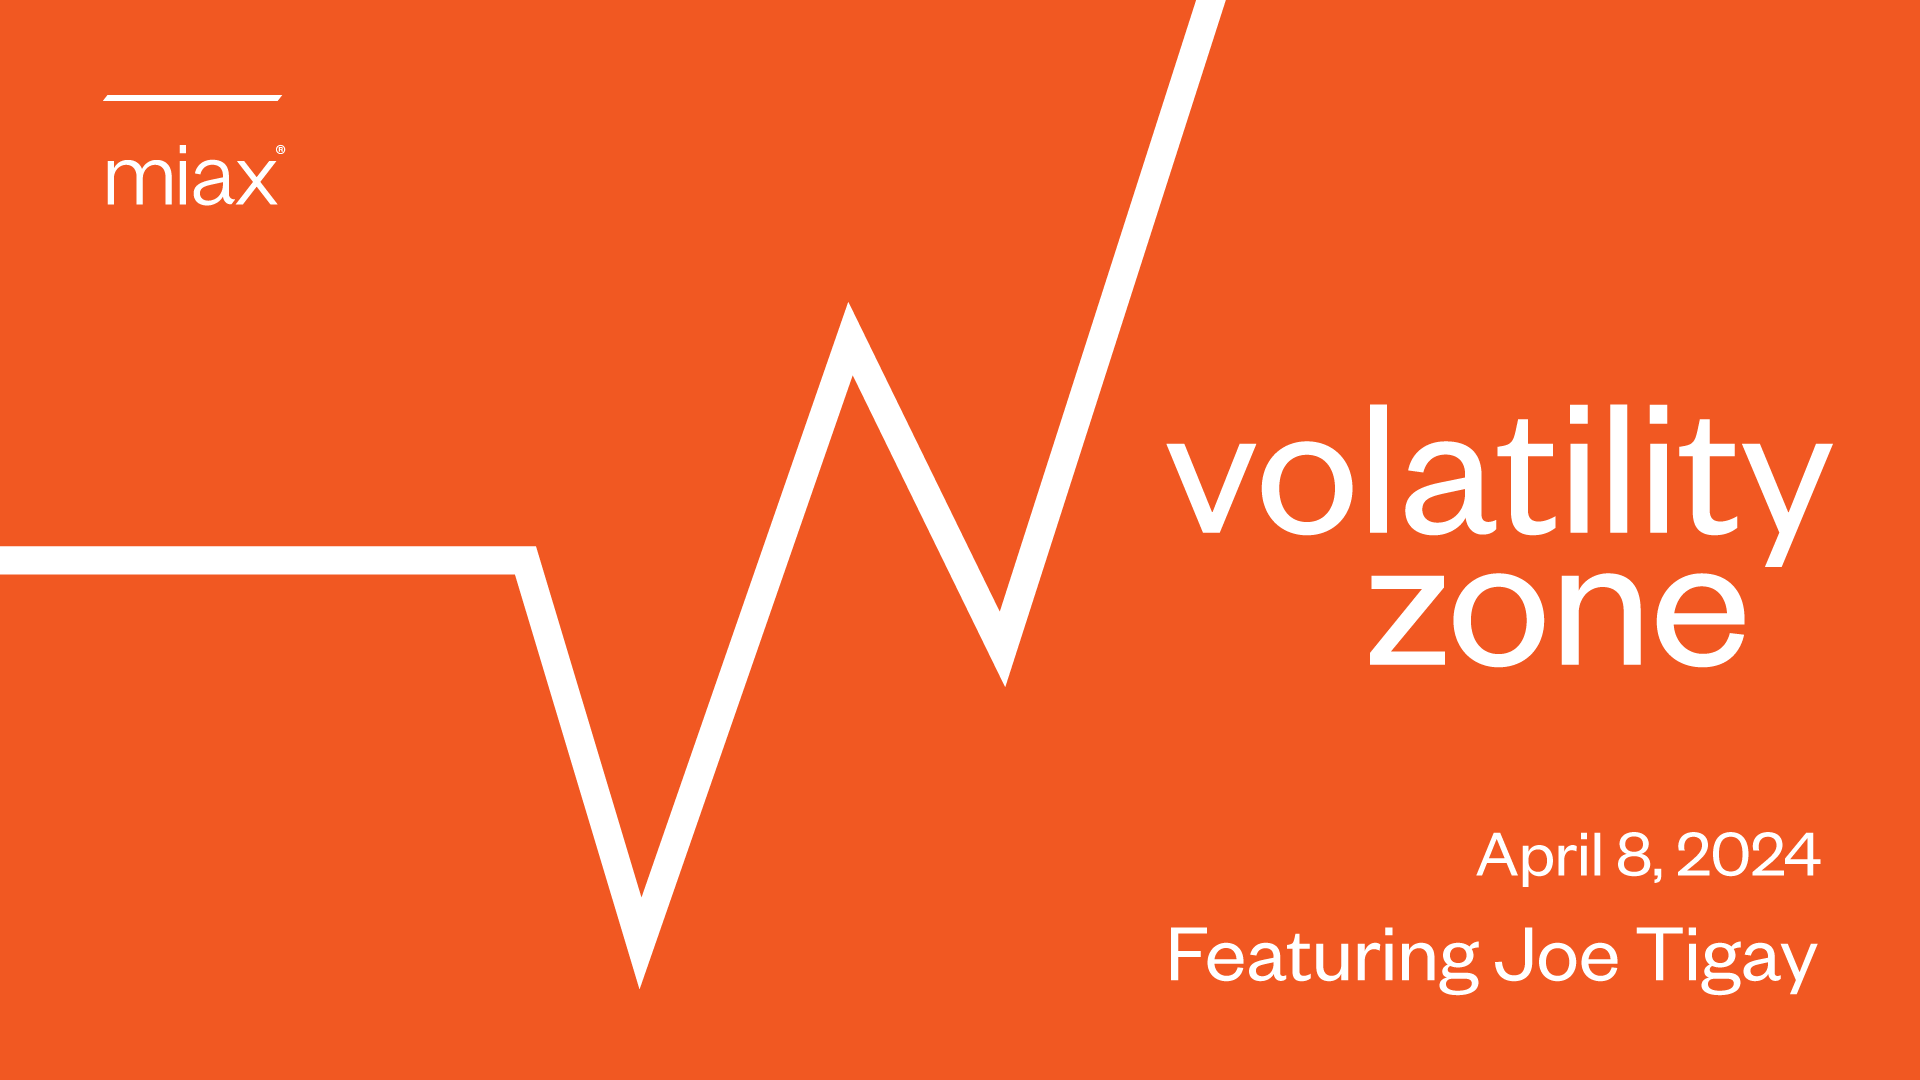 MIAX Volatility Zone April 8, 2024